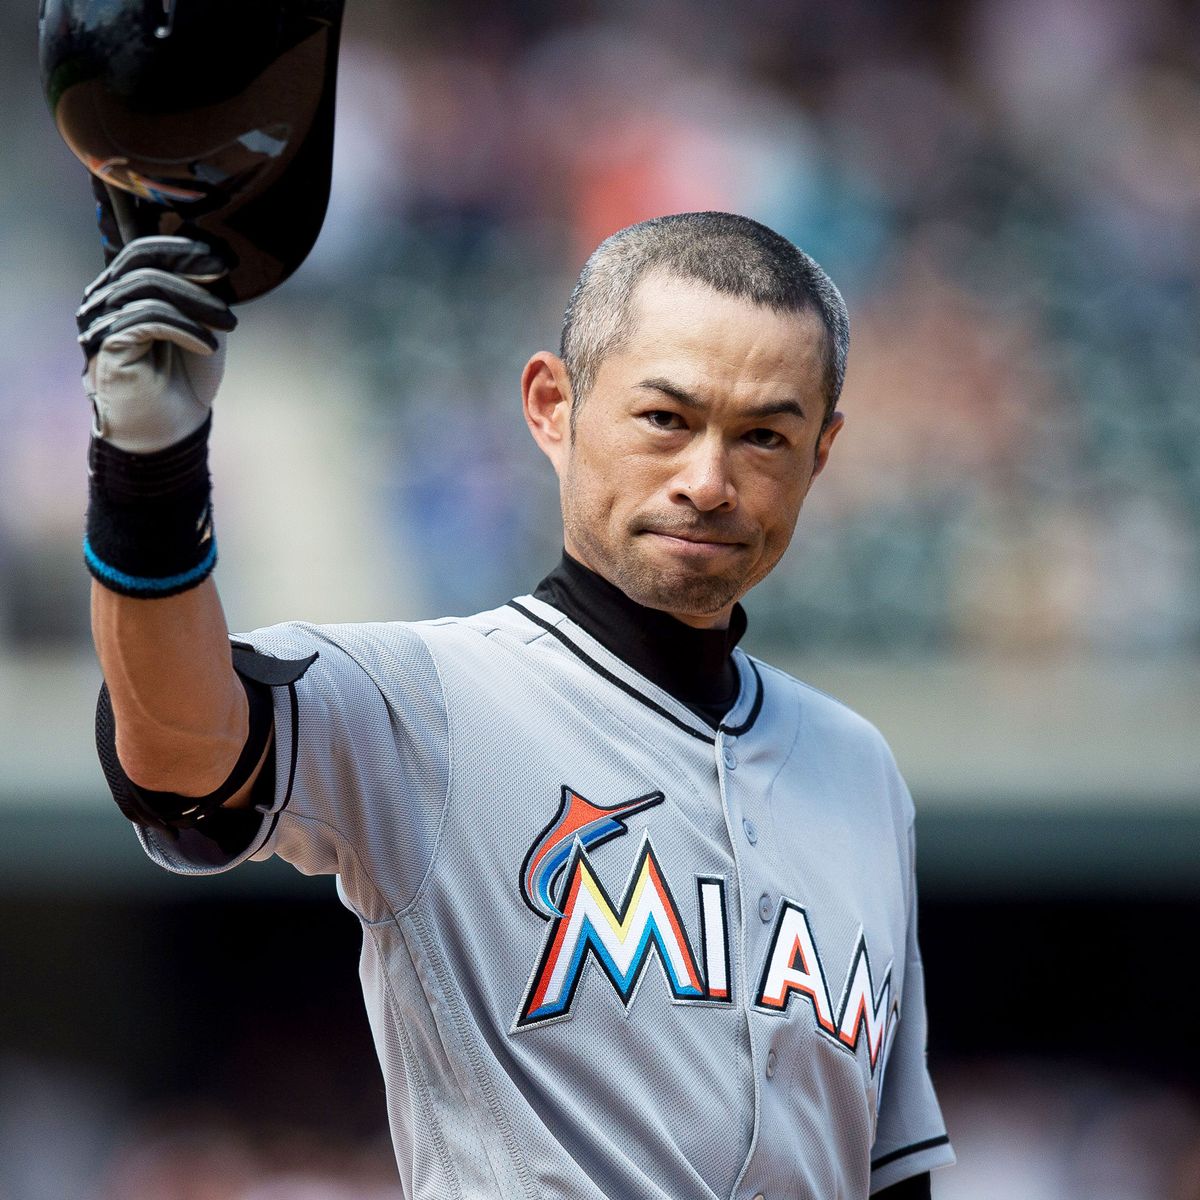 Ichiro Suzuki Retires - Inside the MLB Star's Stats, Teams & Career